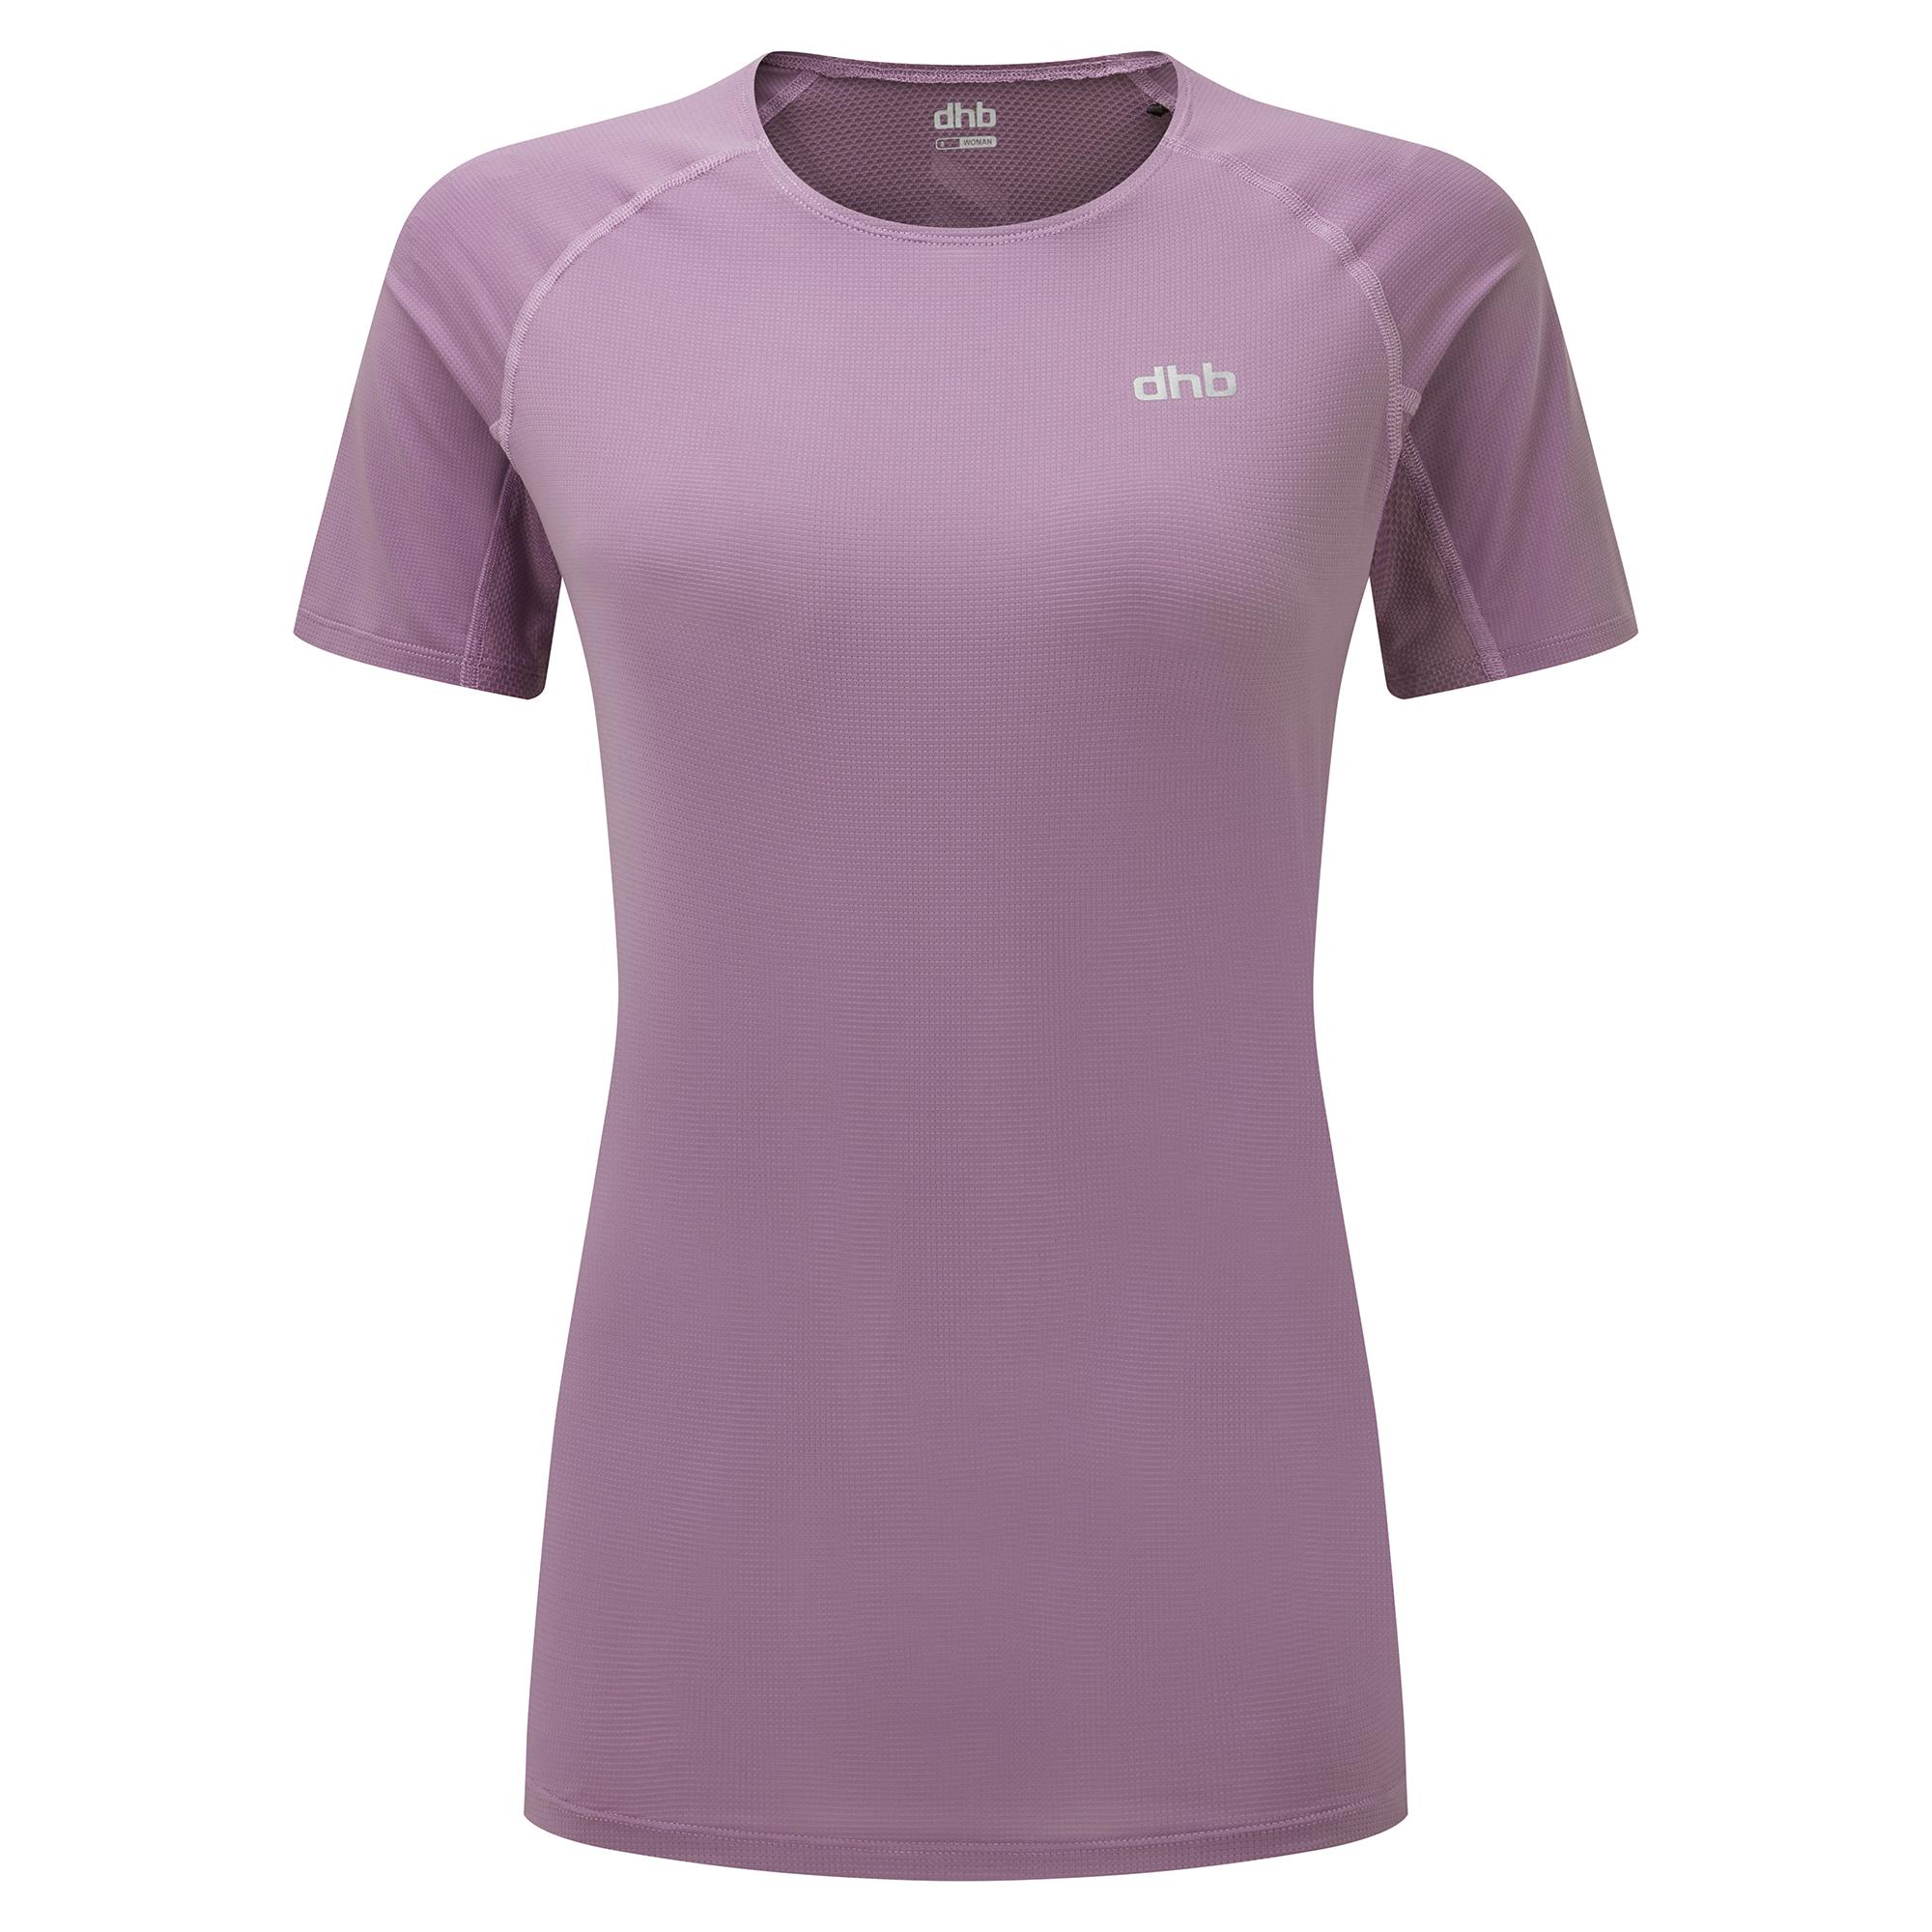 Dhb Aeron Womens Short Sleeve Run Top - Purple